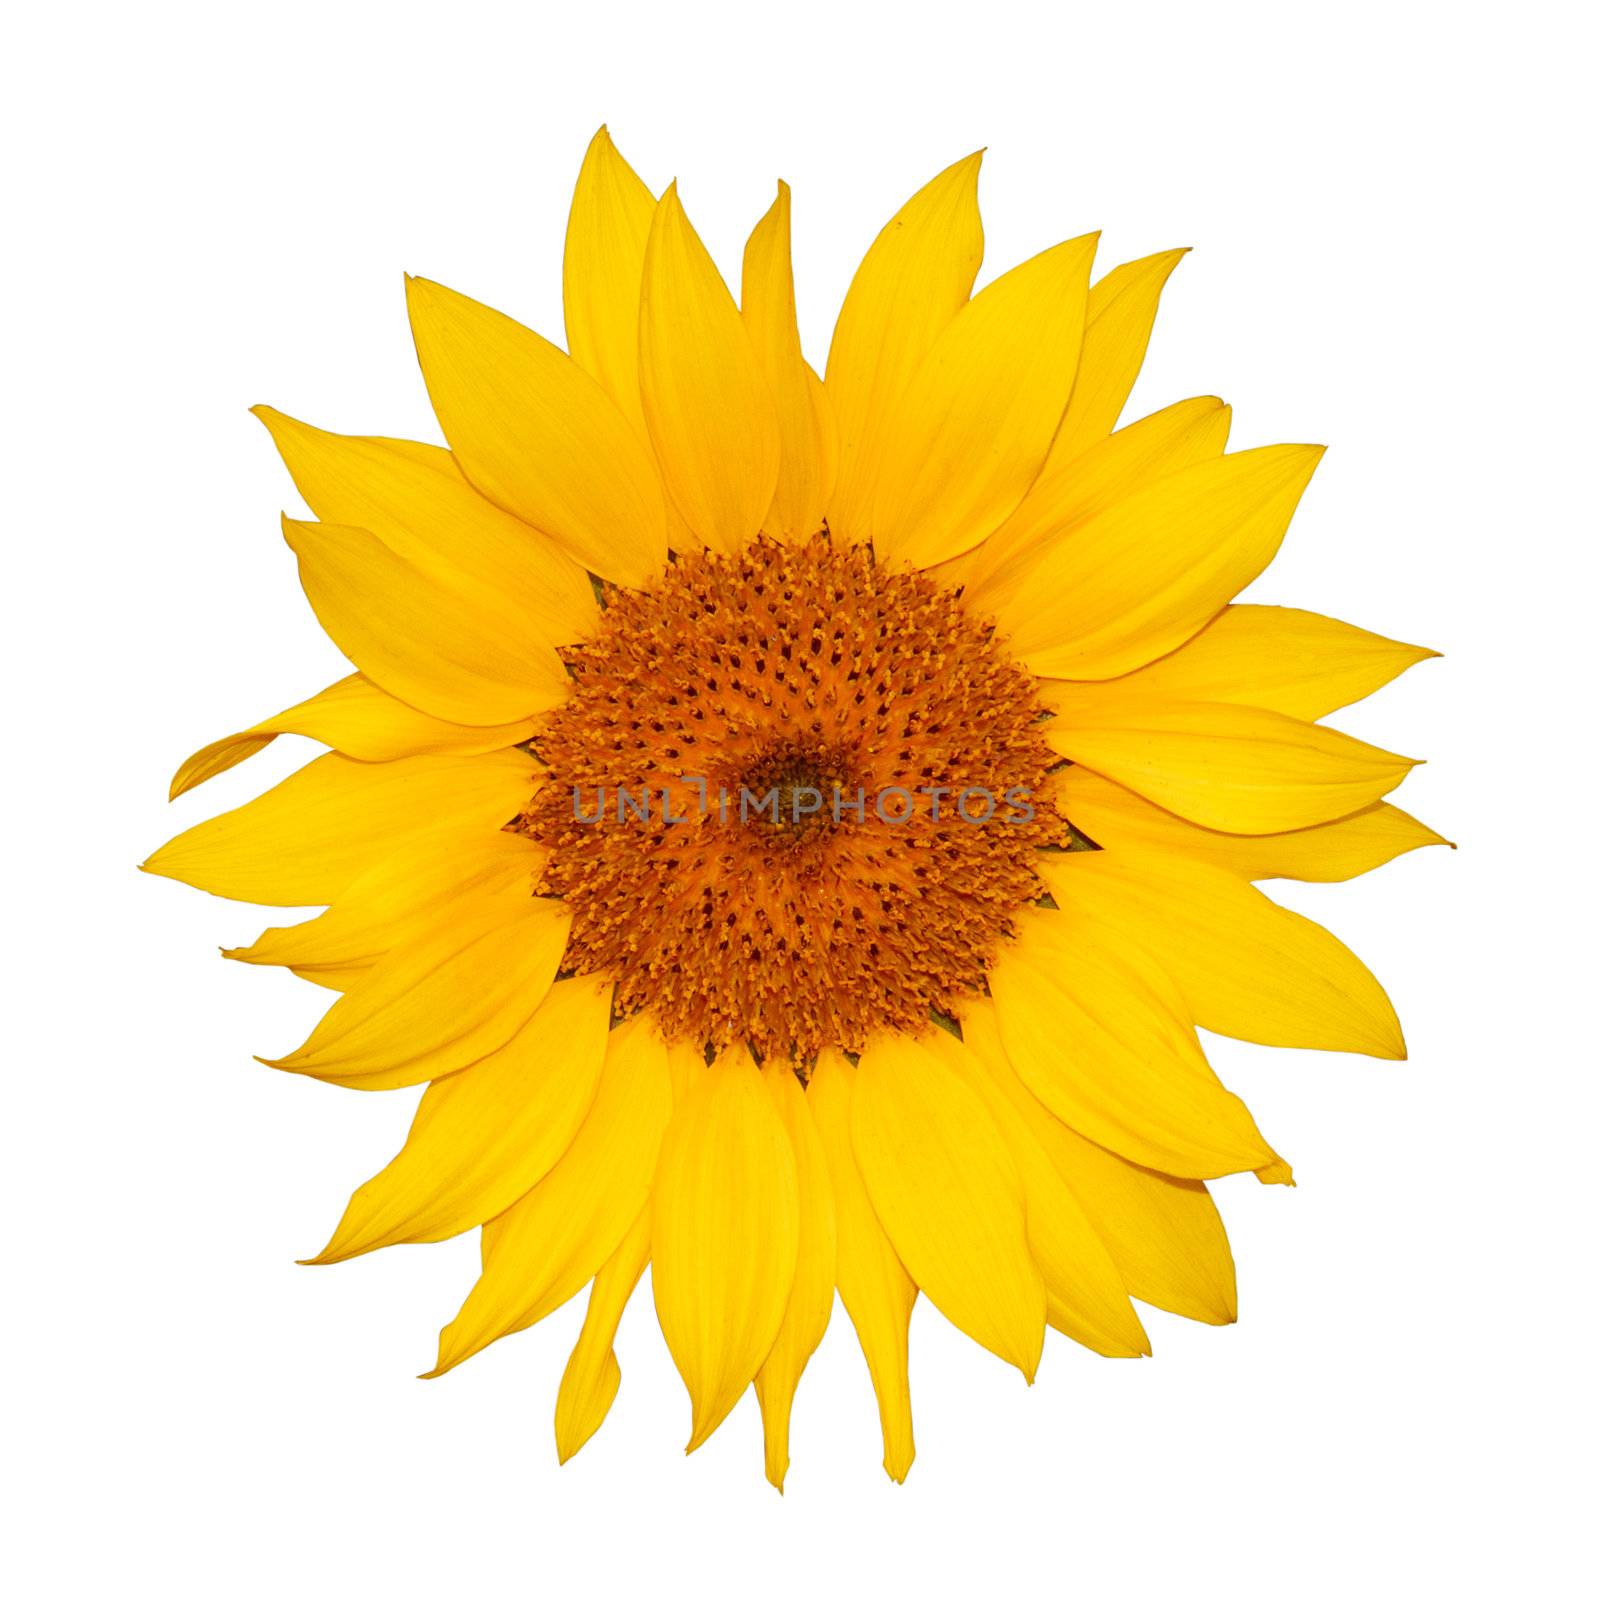 Colorful single sunflower isolated on white background.